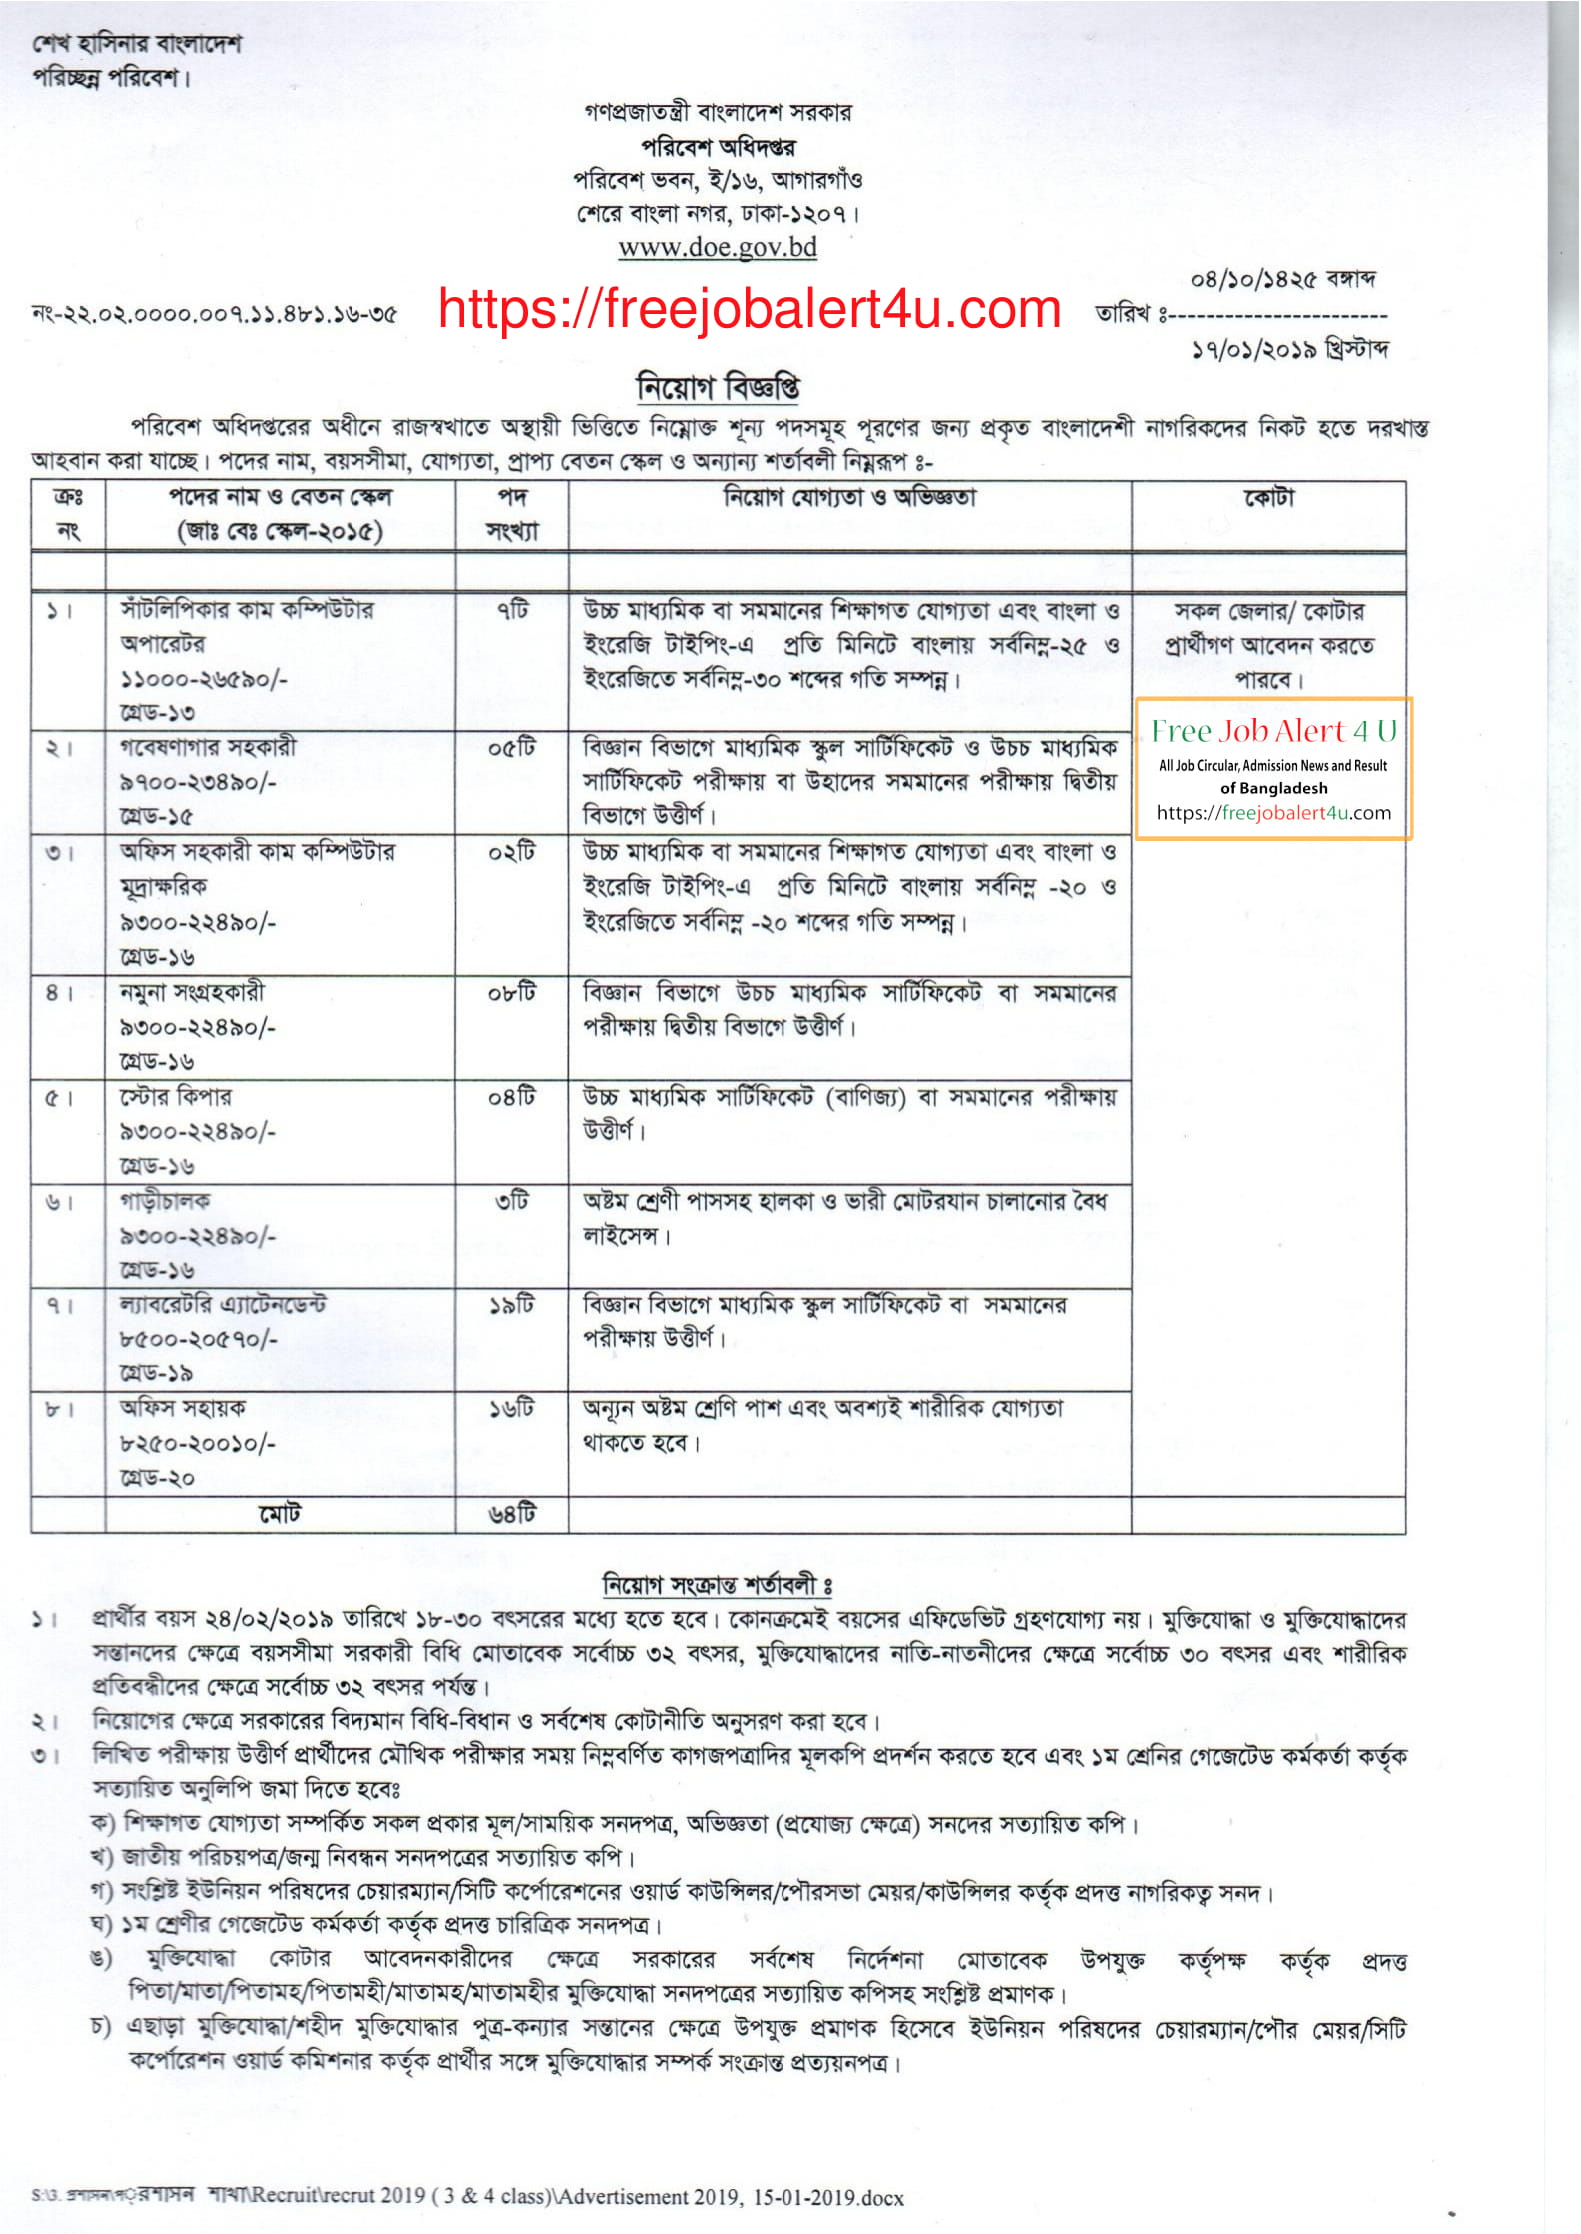 Department of Environment (DOE) job circular 2019